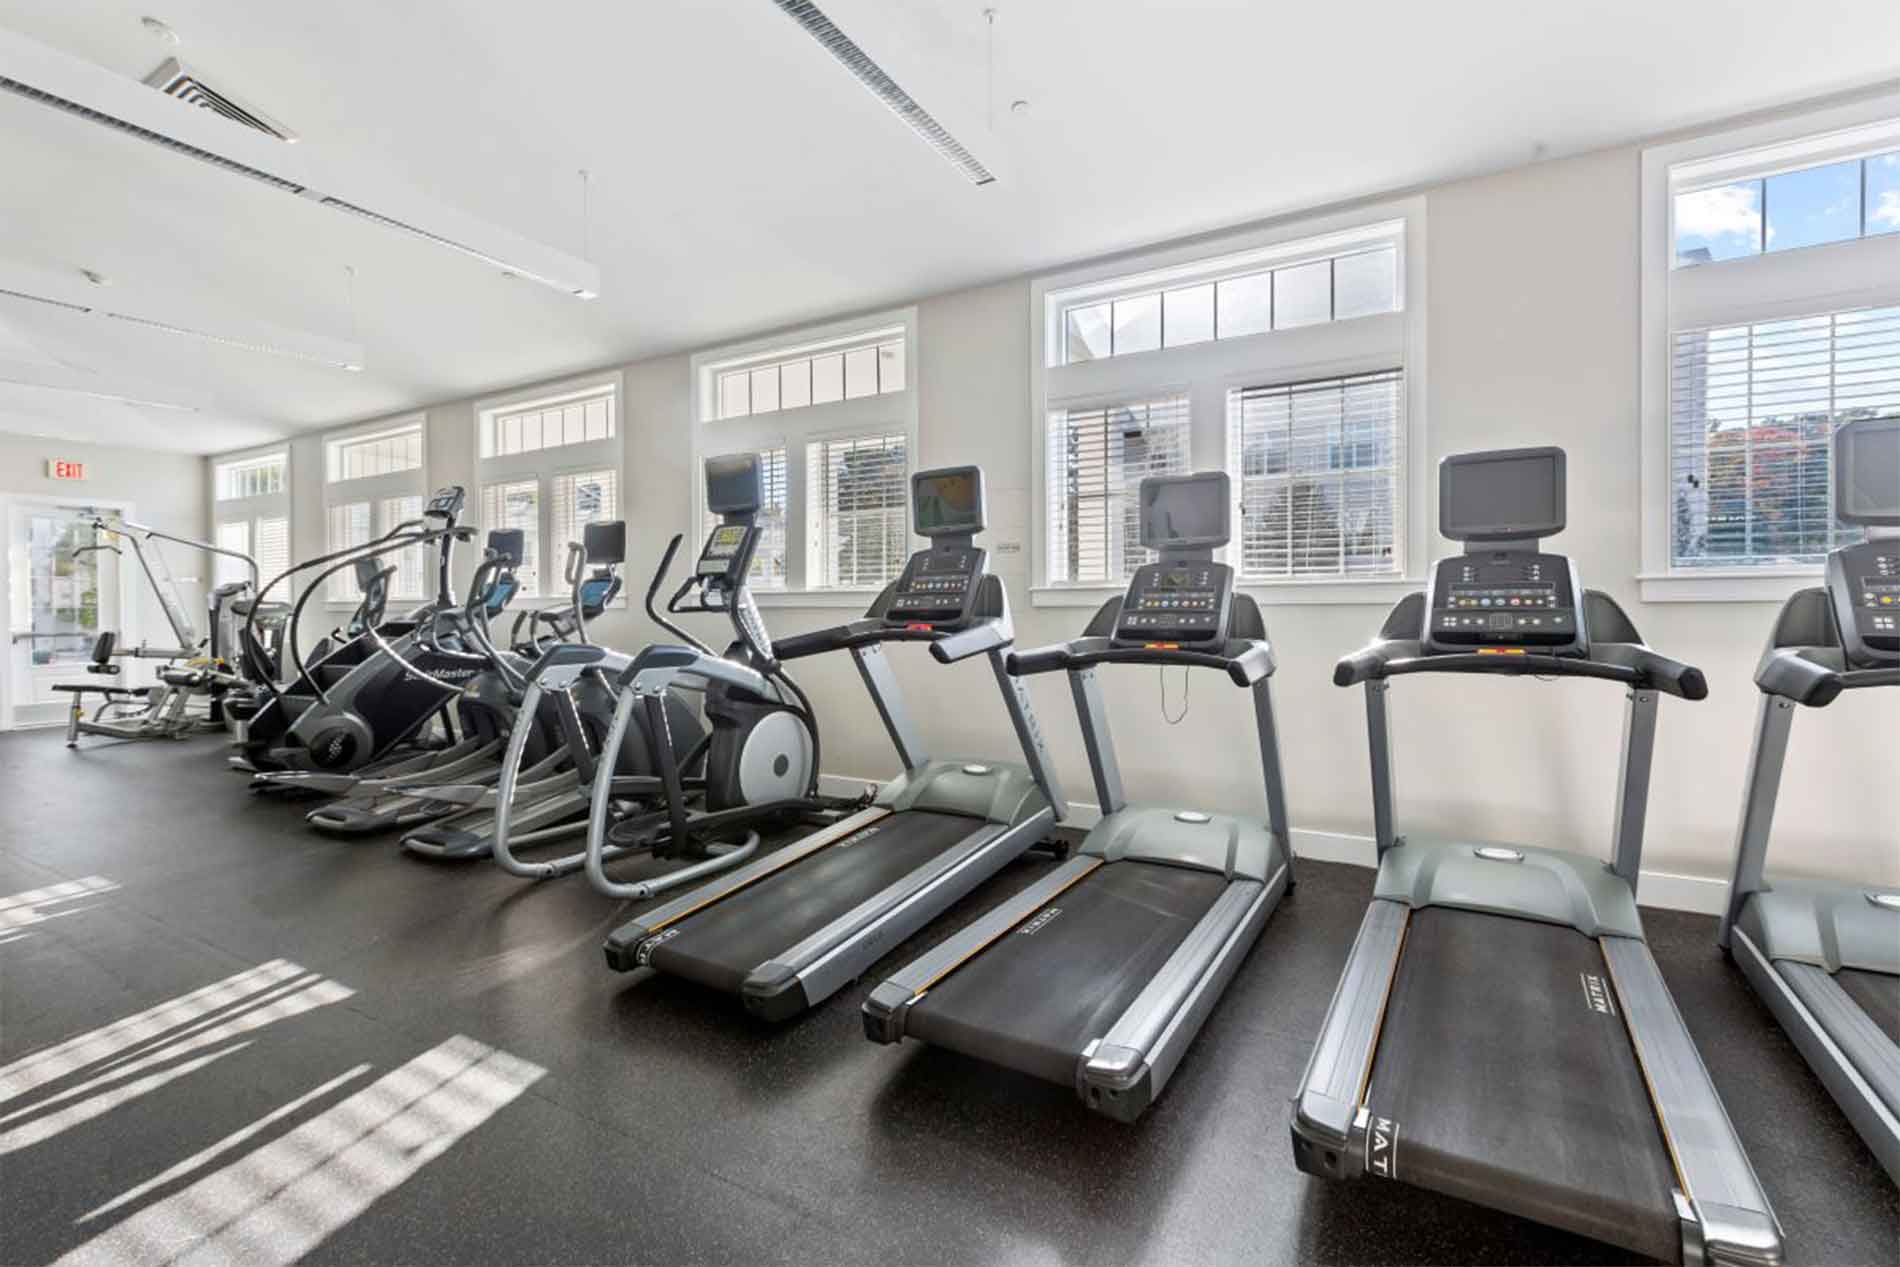 One Upland fitness center treadmills